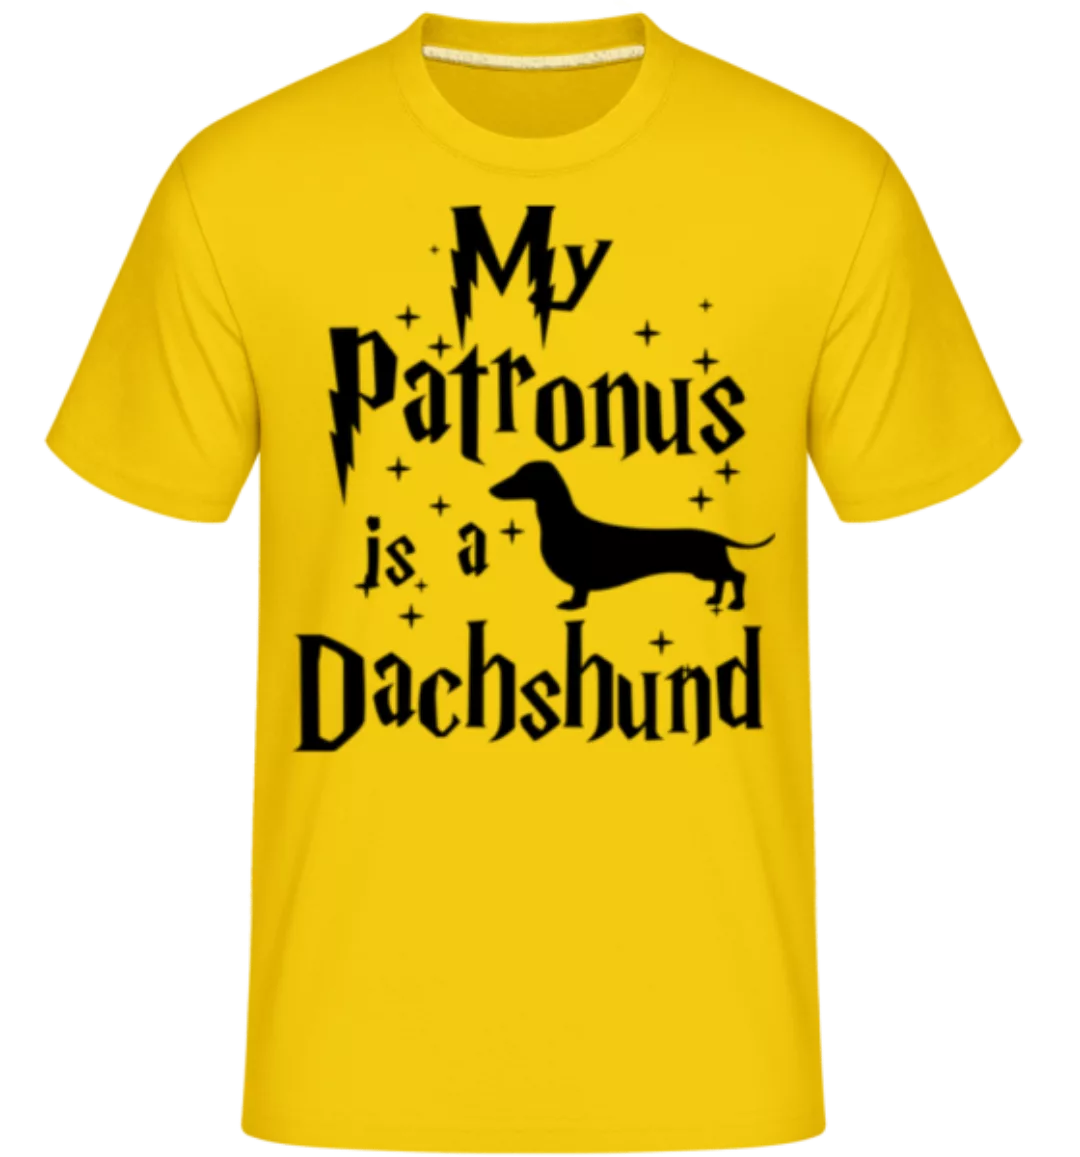 My Patronus Is A Dachshund · Shirtinator Männer T-Shirt günstig online kaufen